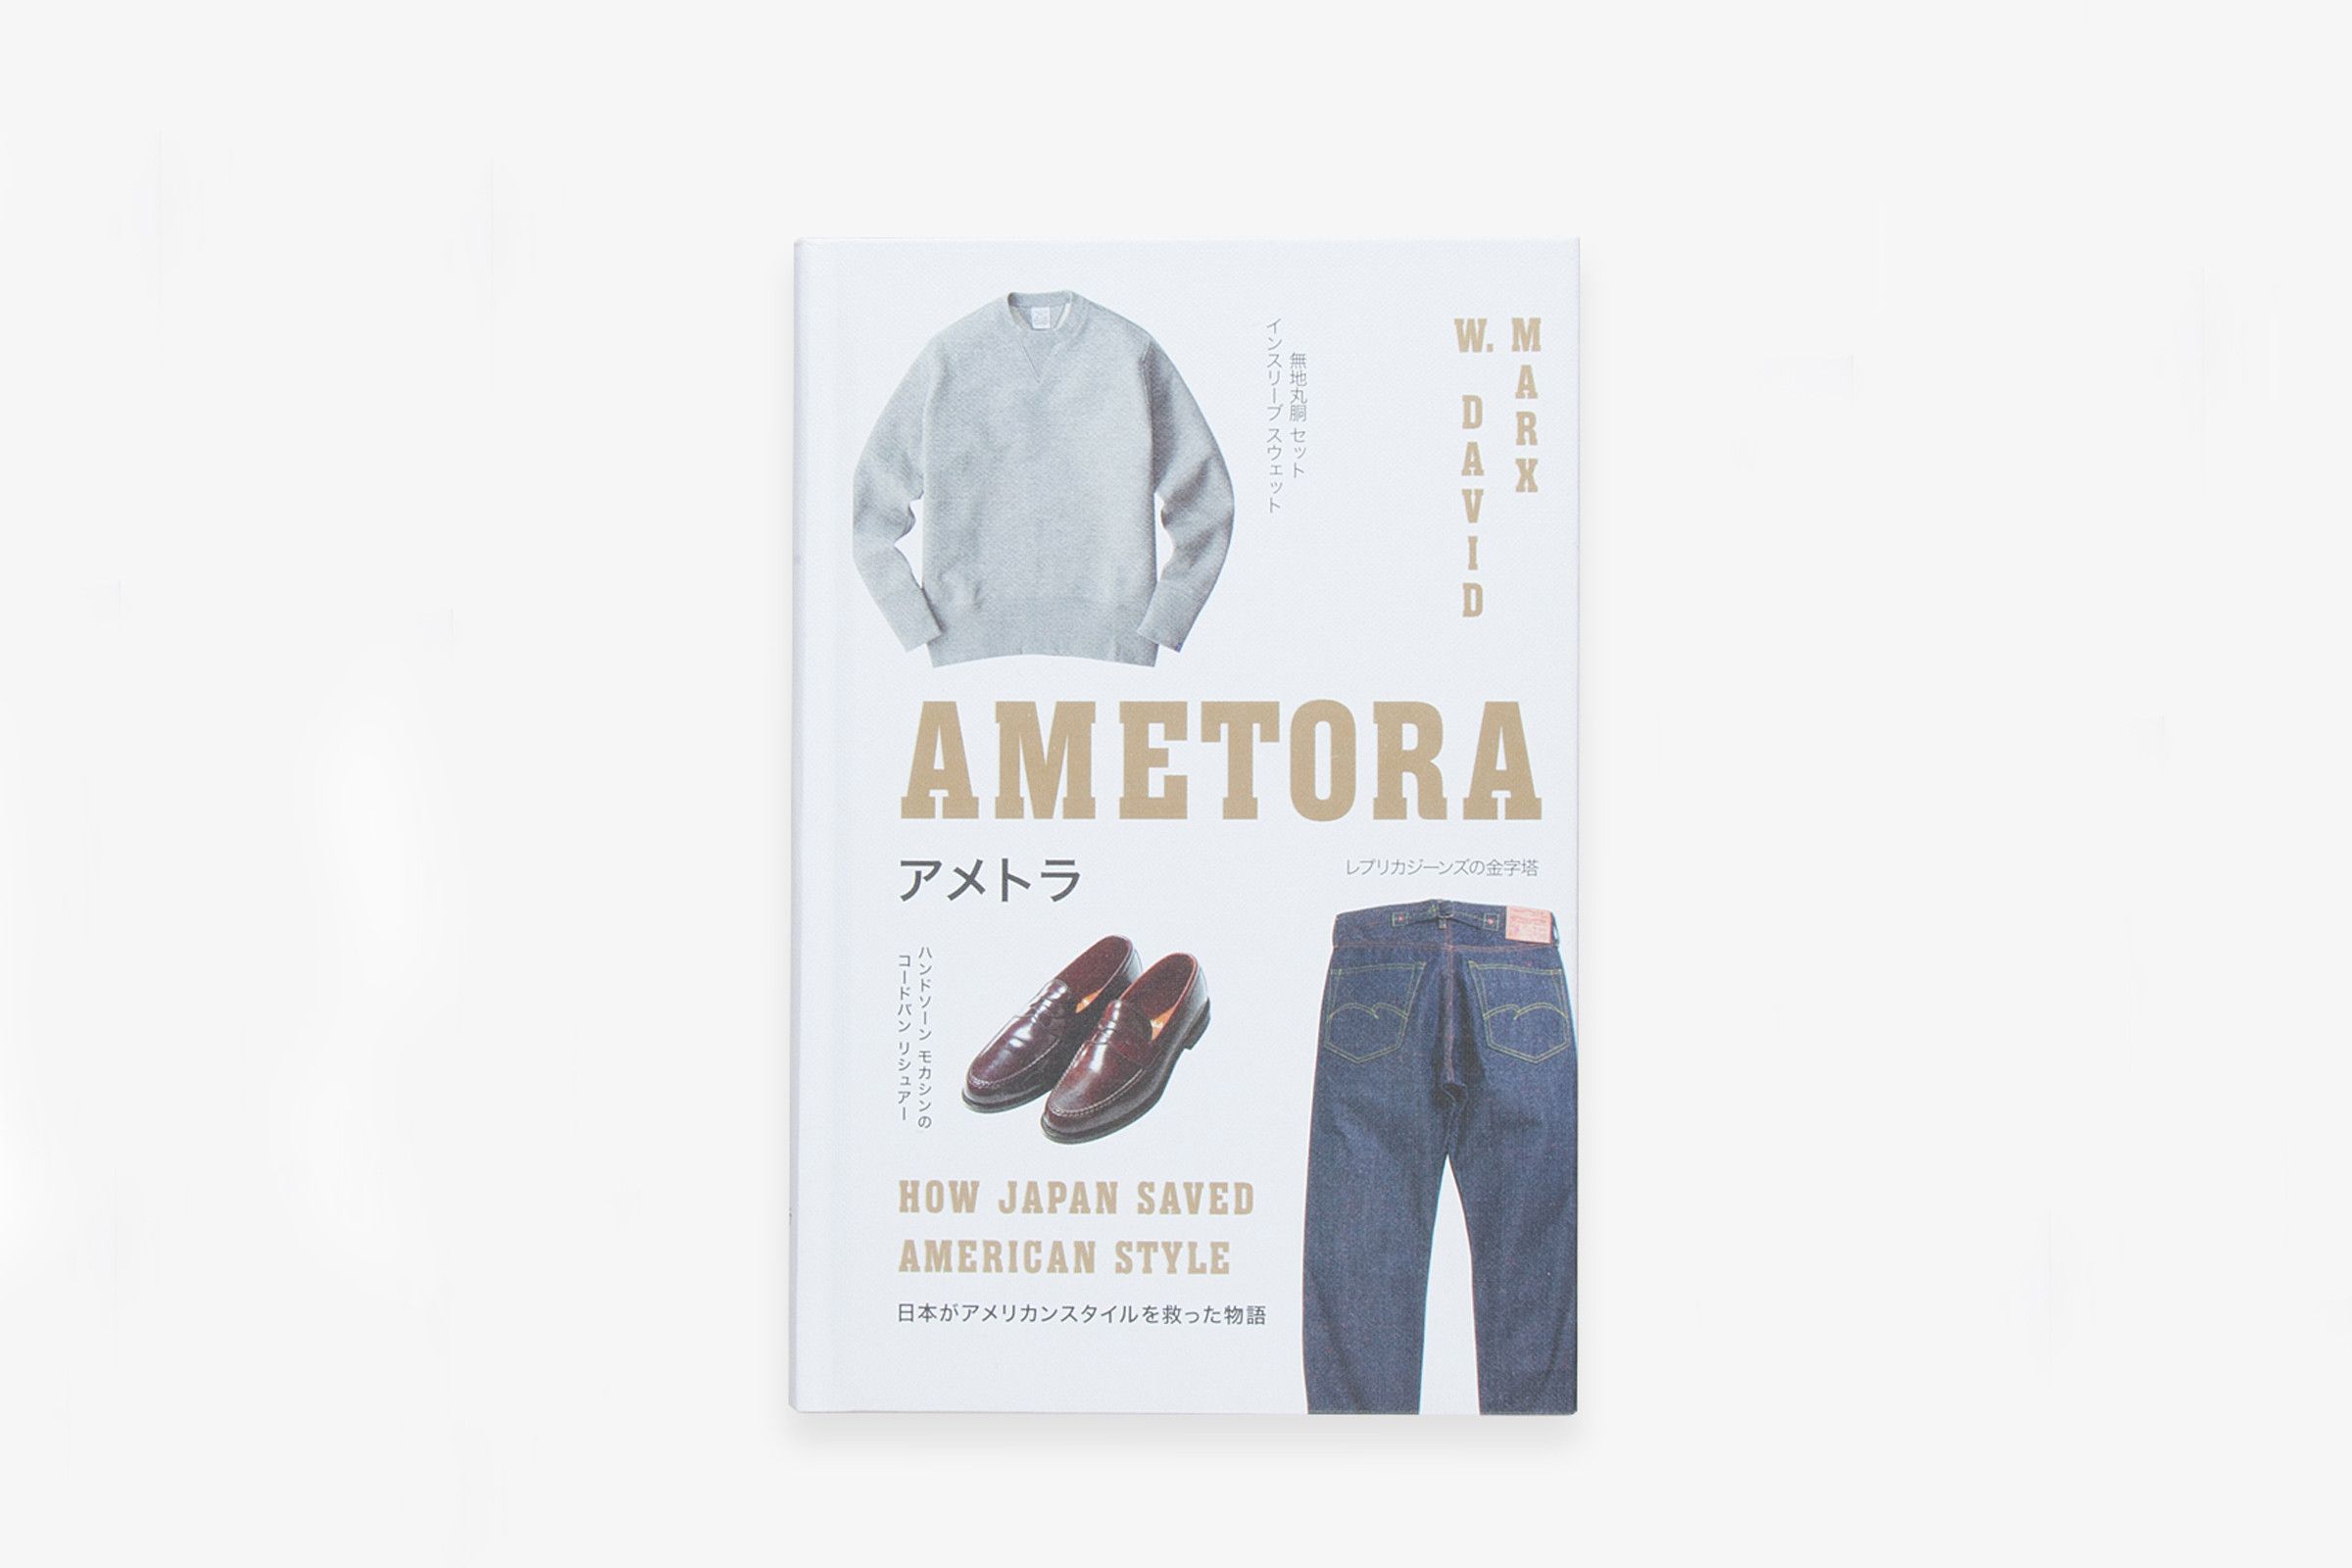 Ametora: How Japan Saved American Style (Basic Books 2015)